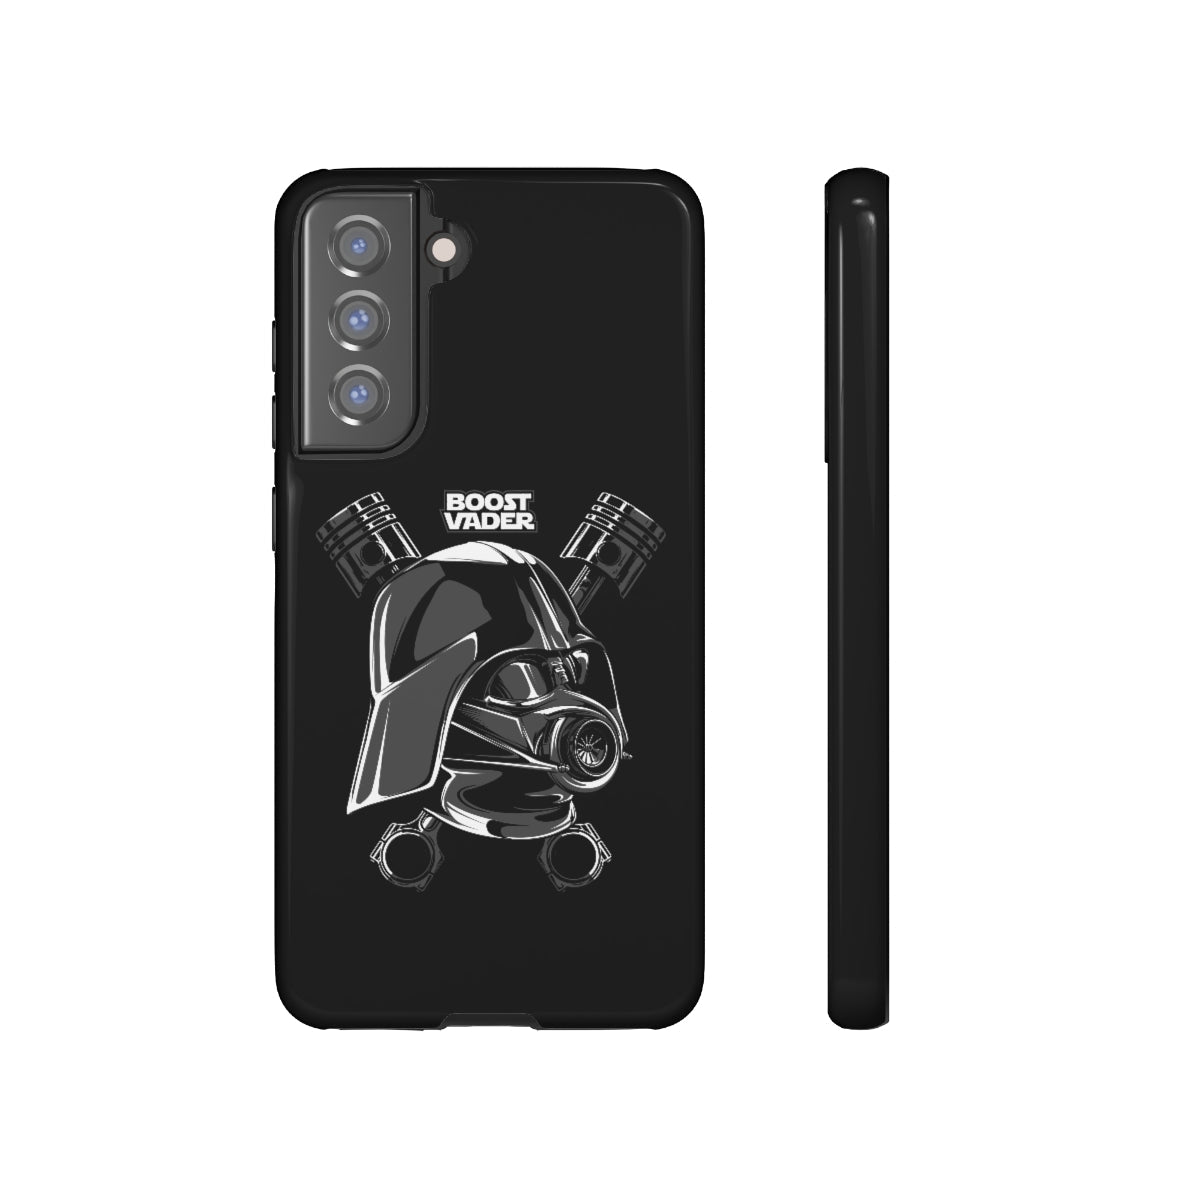 Boost Vader - Car Phone Case - Samsung Galaxy S21 FE